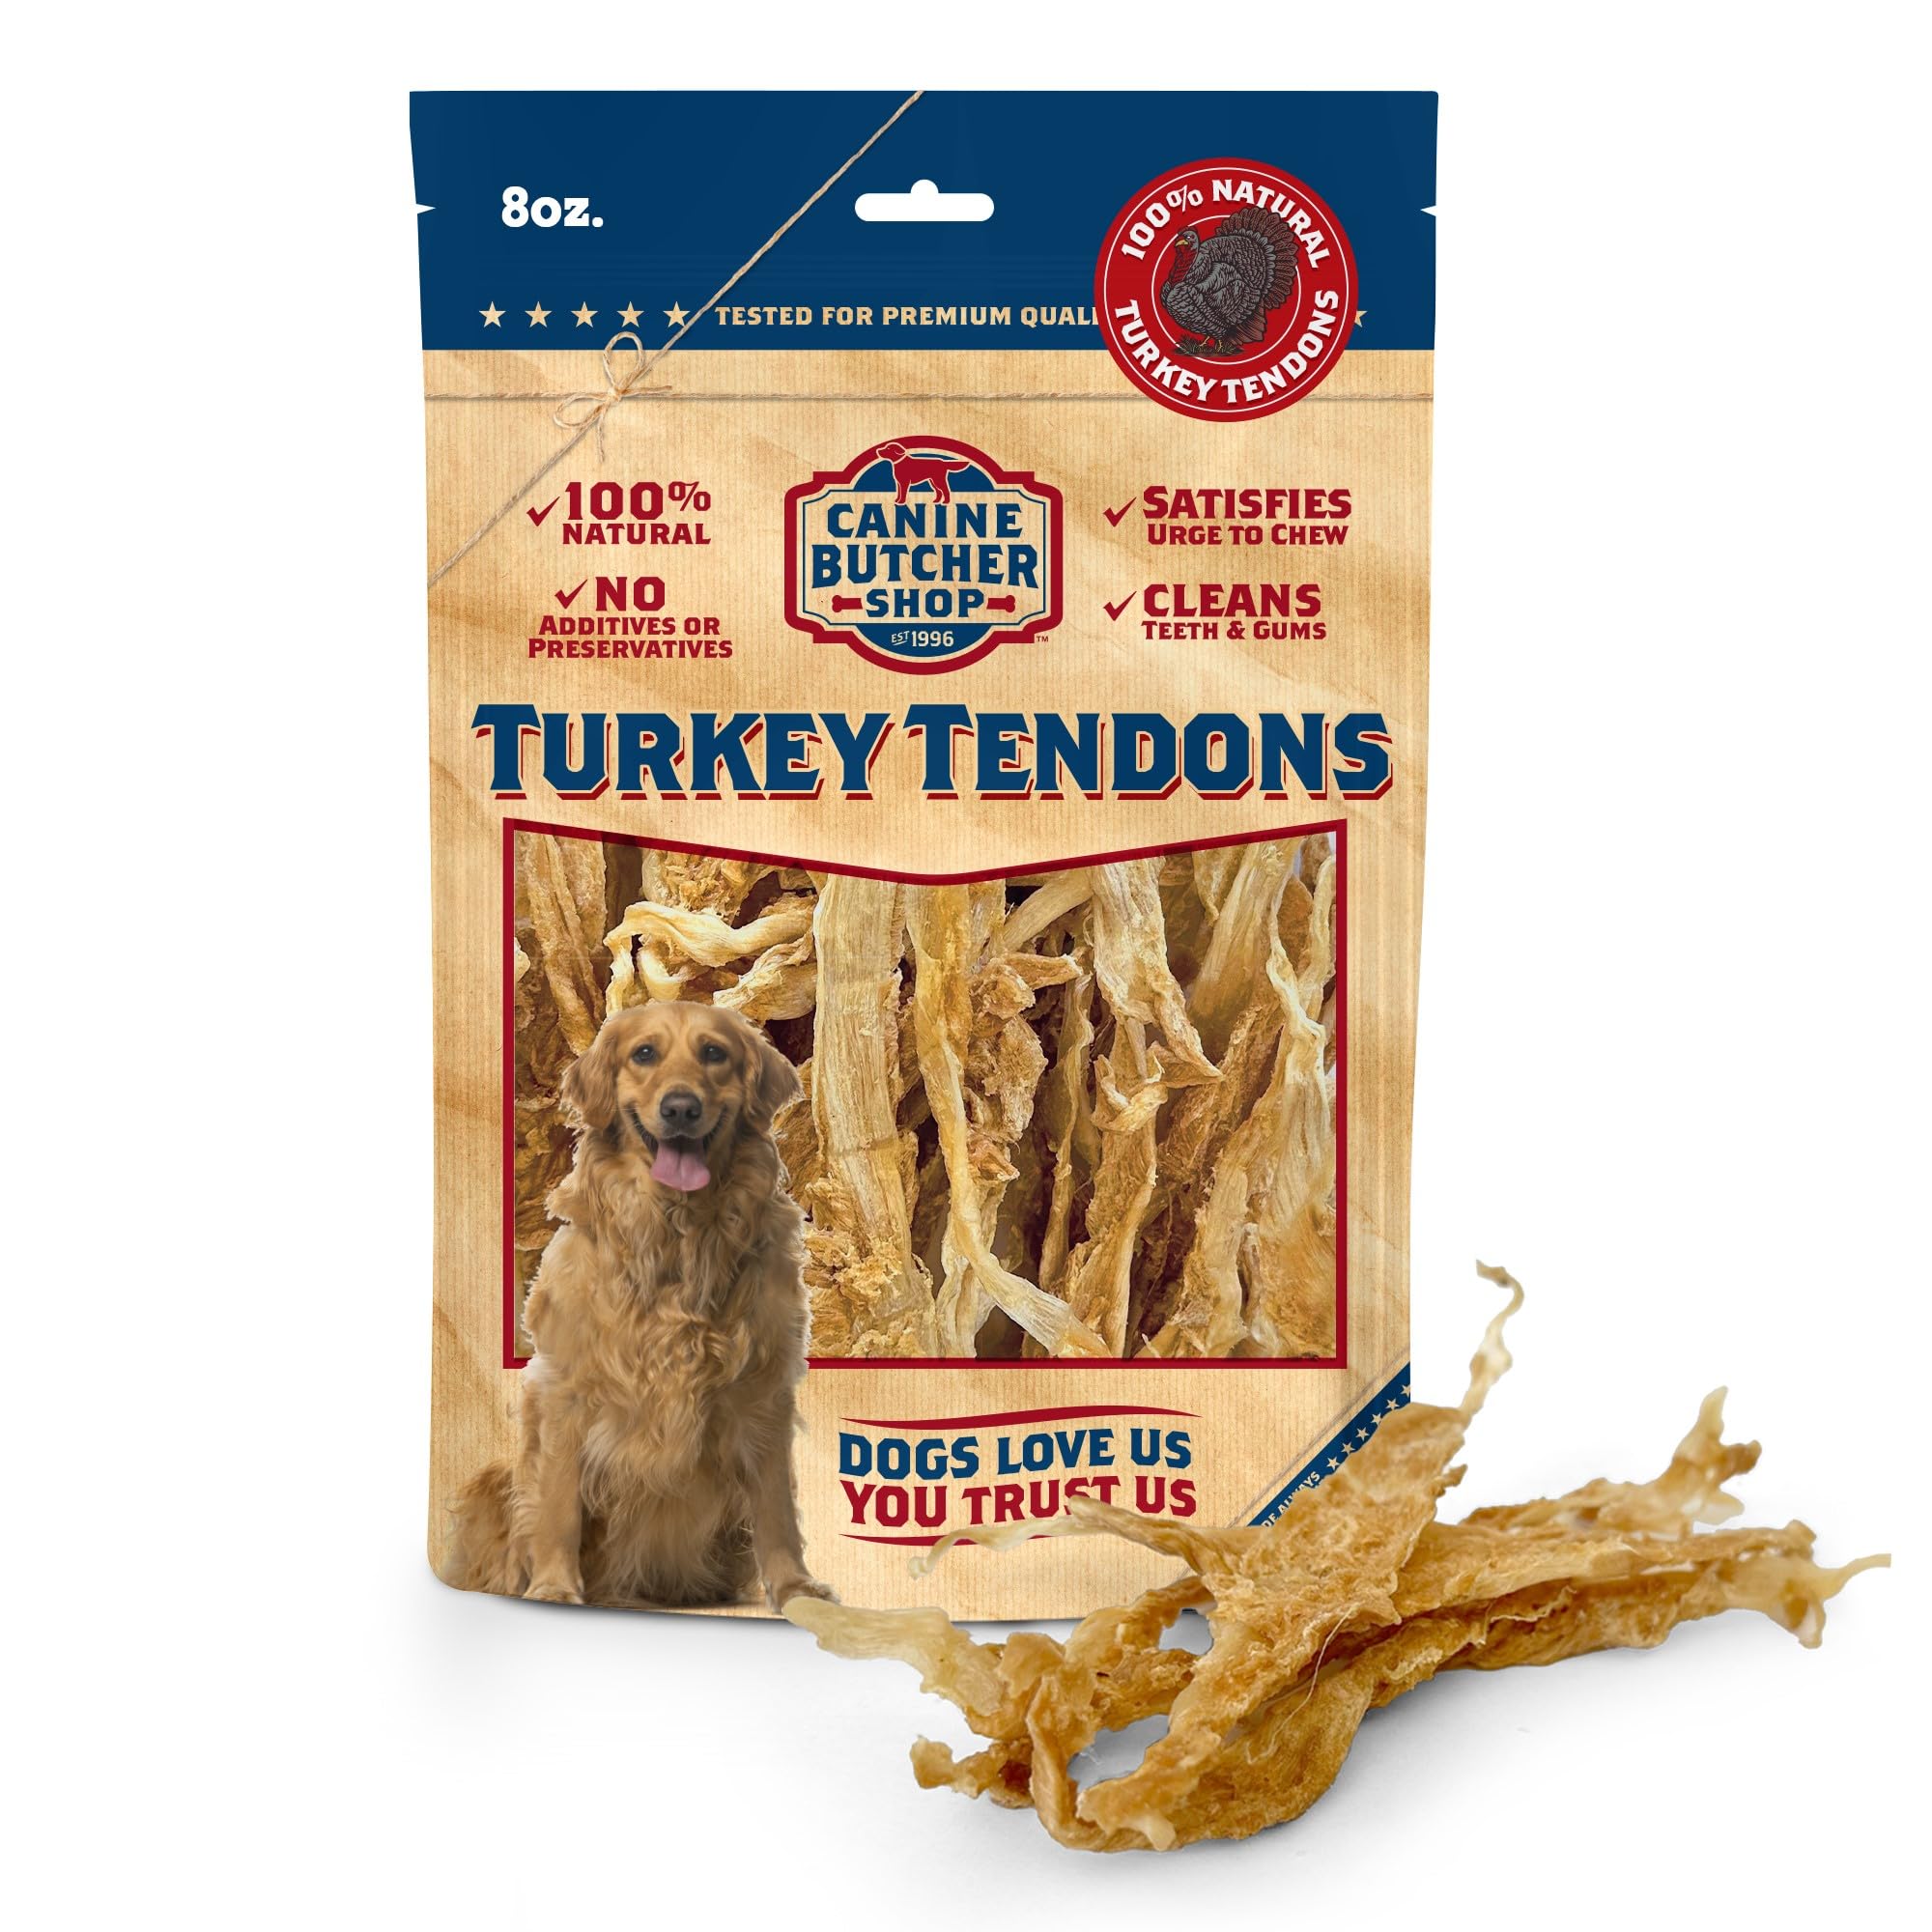 Canine Butcher Shop USA Turkey Tendon Bag